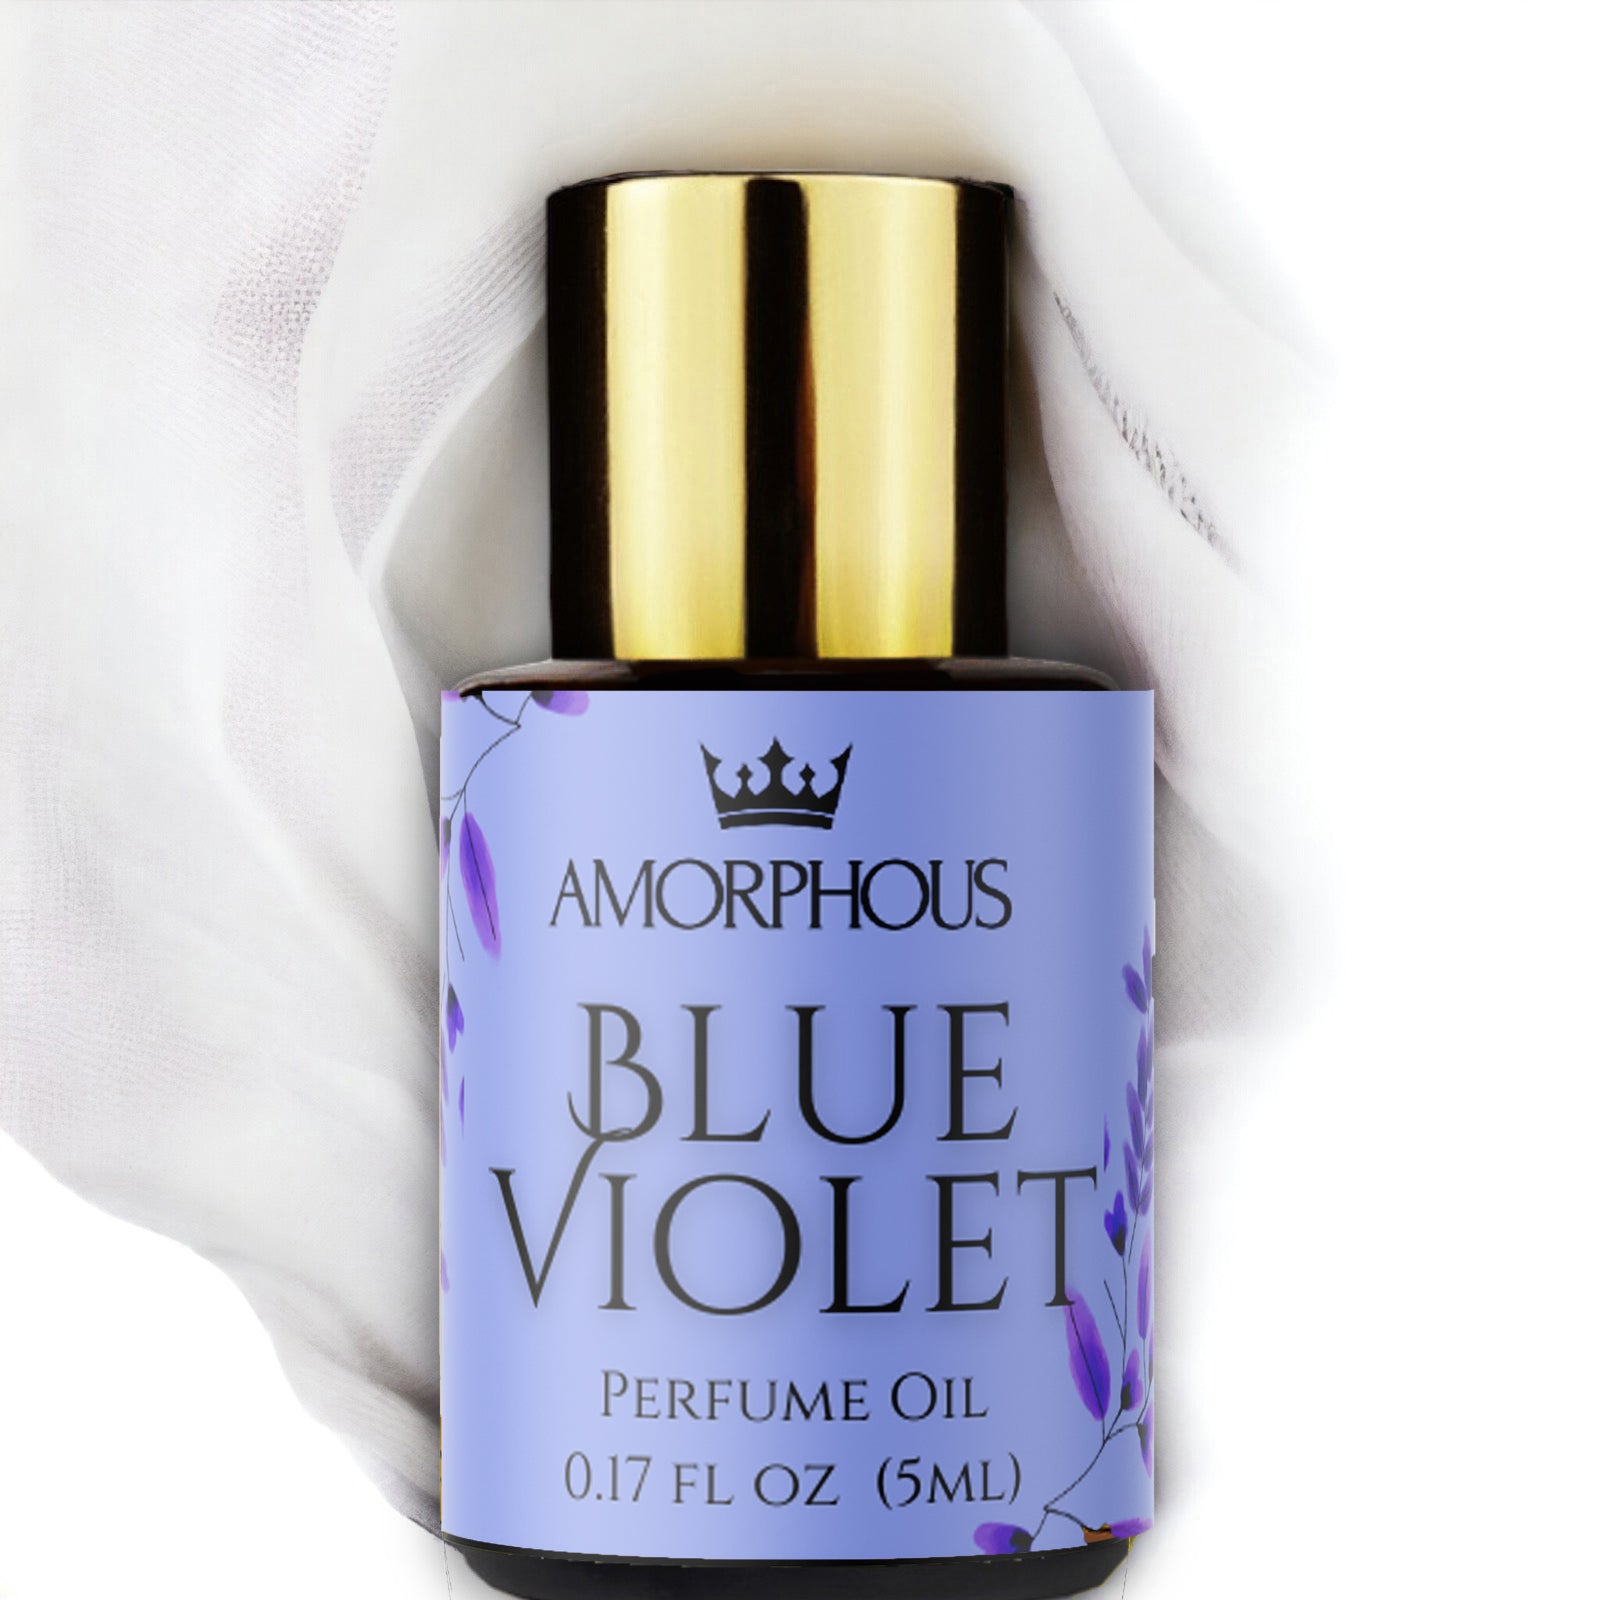 Blue violet perfume